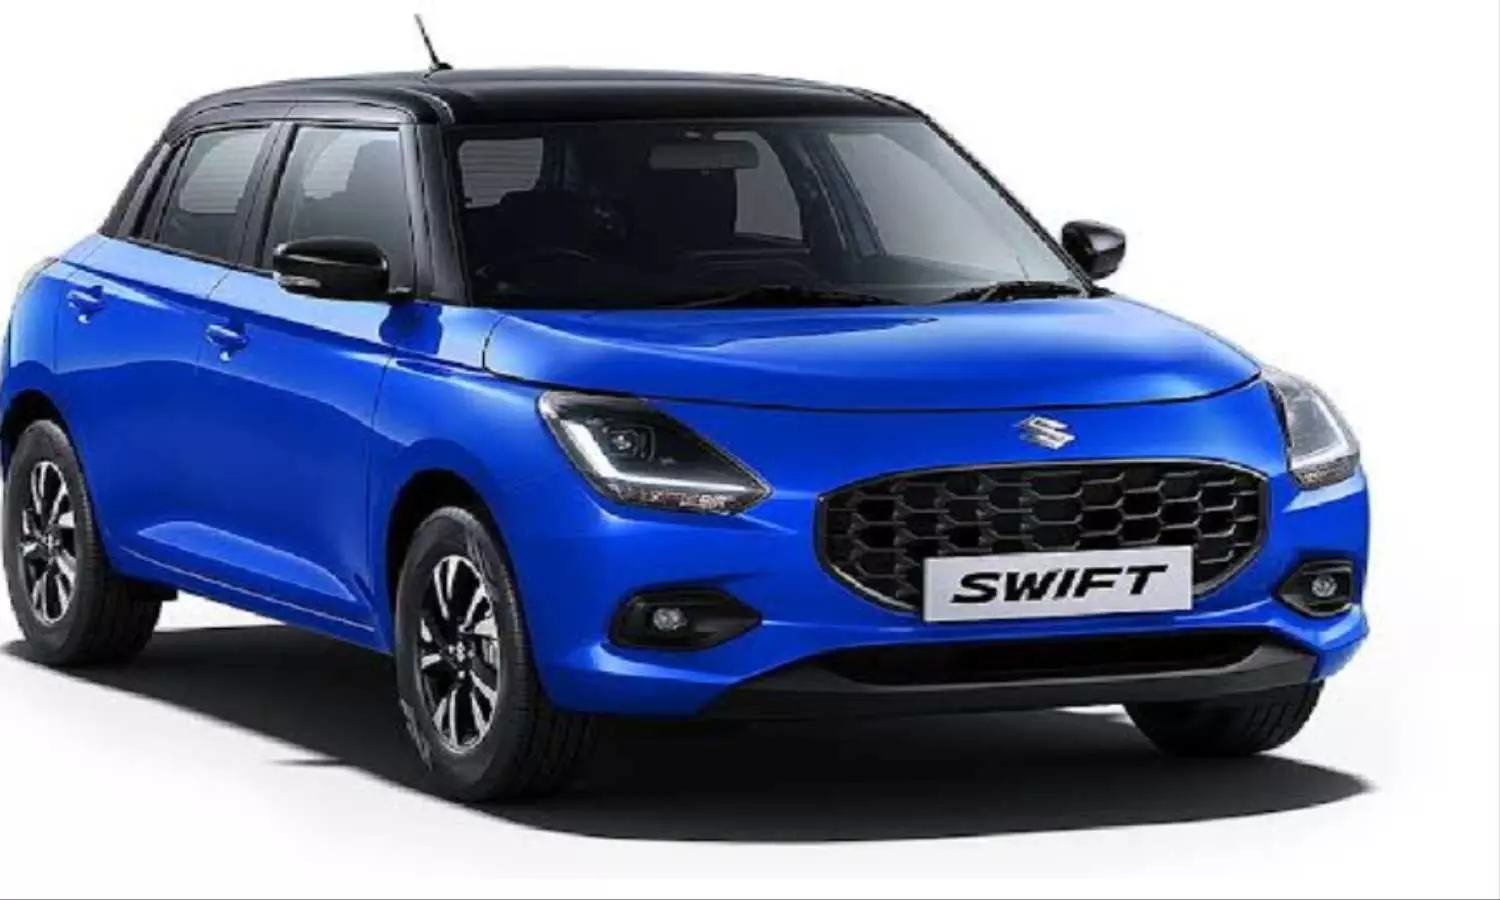 Maruti Suzuki Swift Offers and discounts